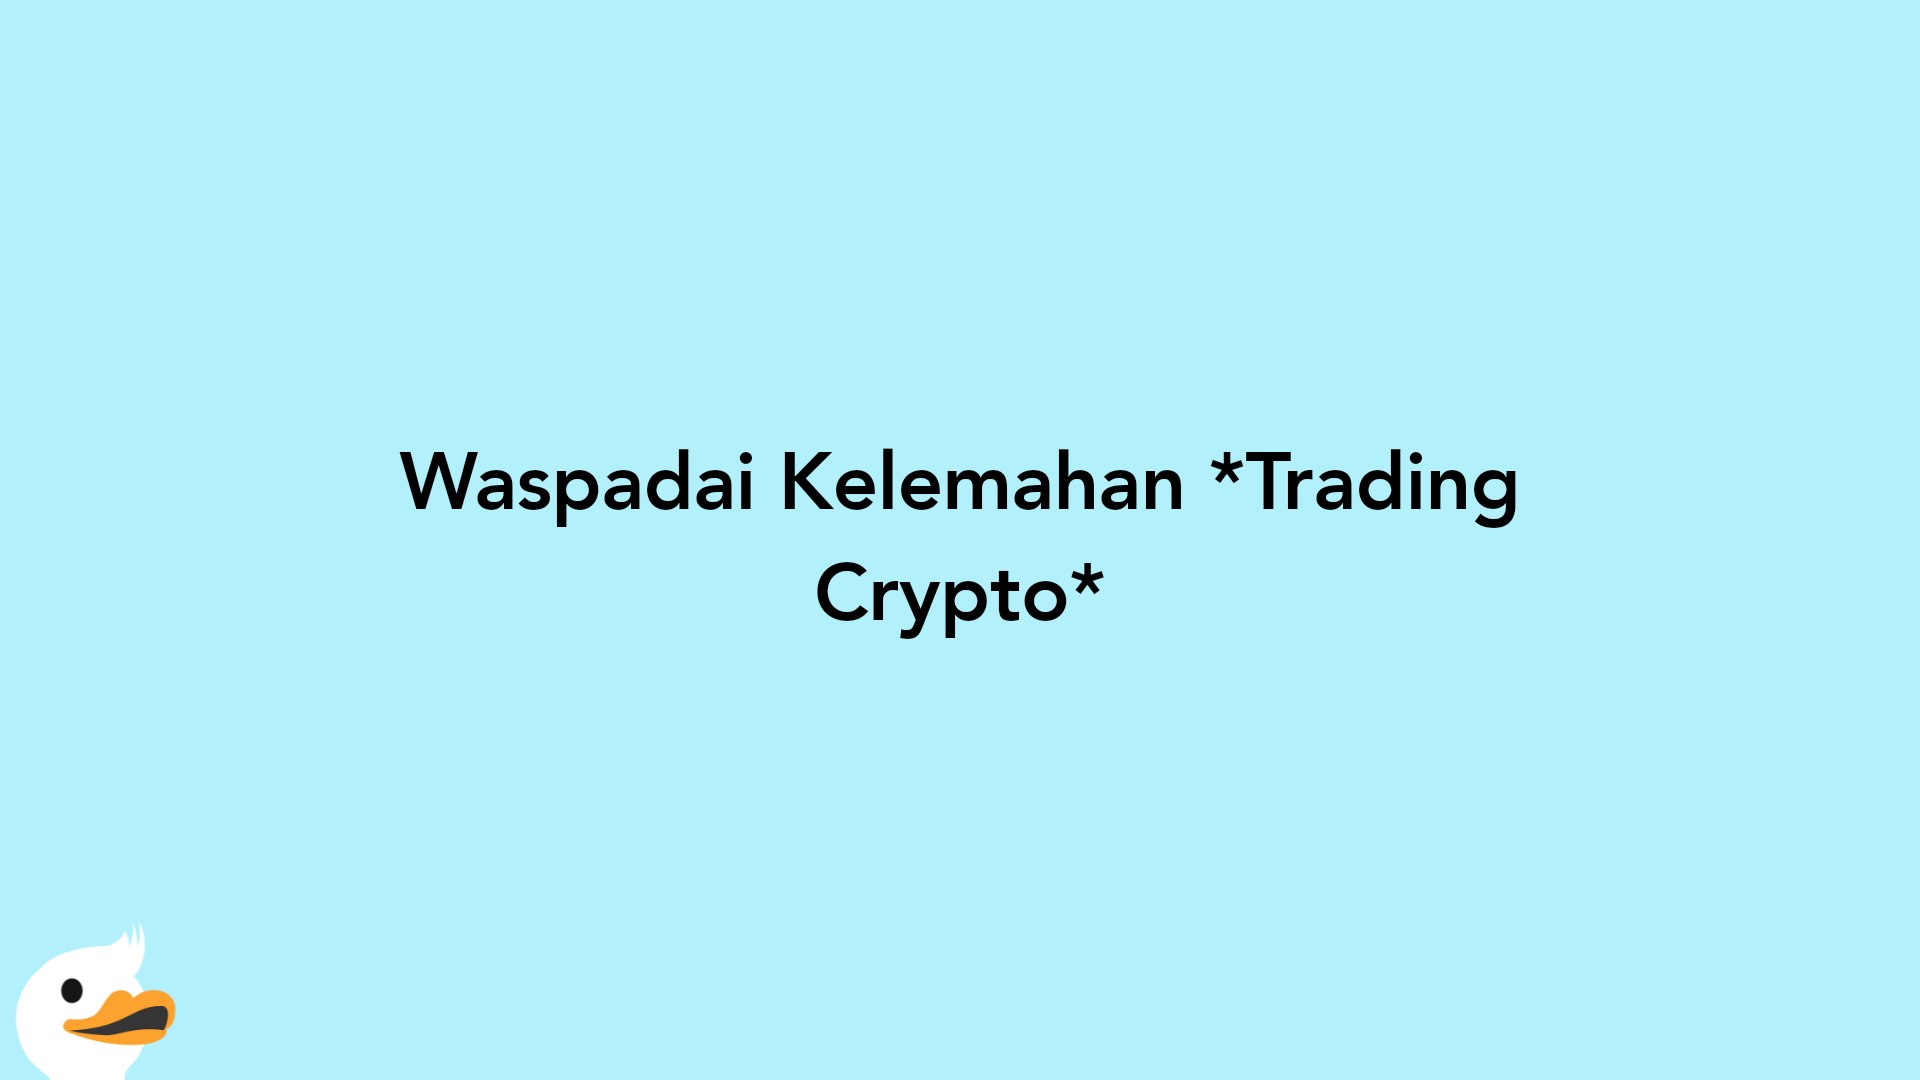 Waspadai Kelemahan Trading Crypto